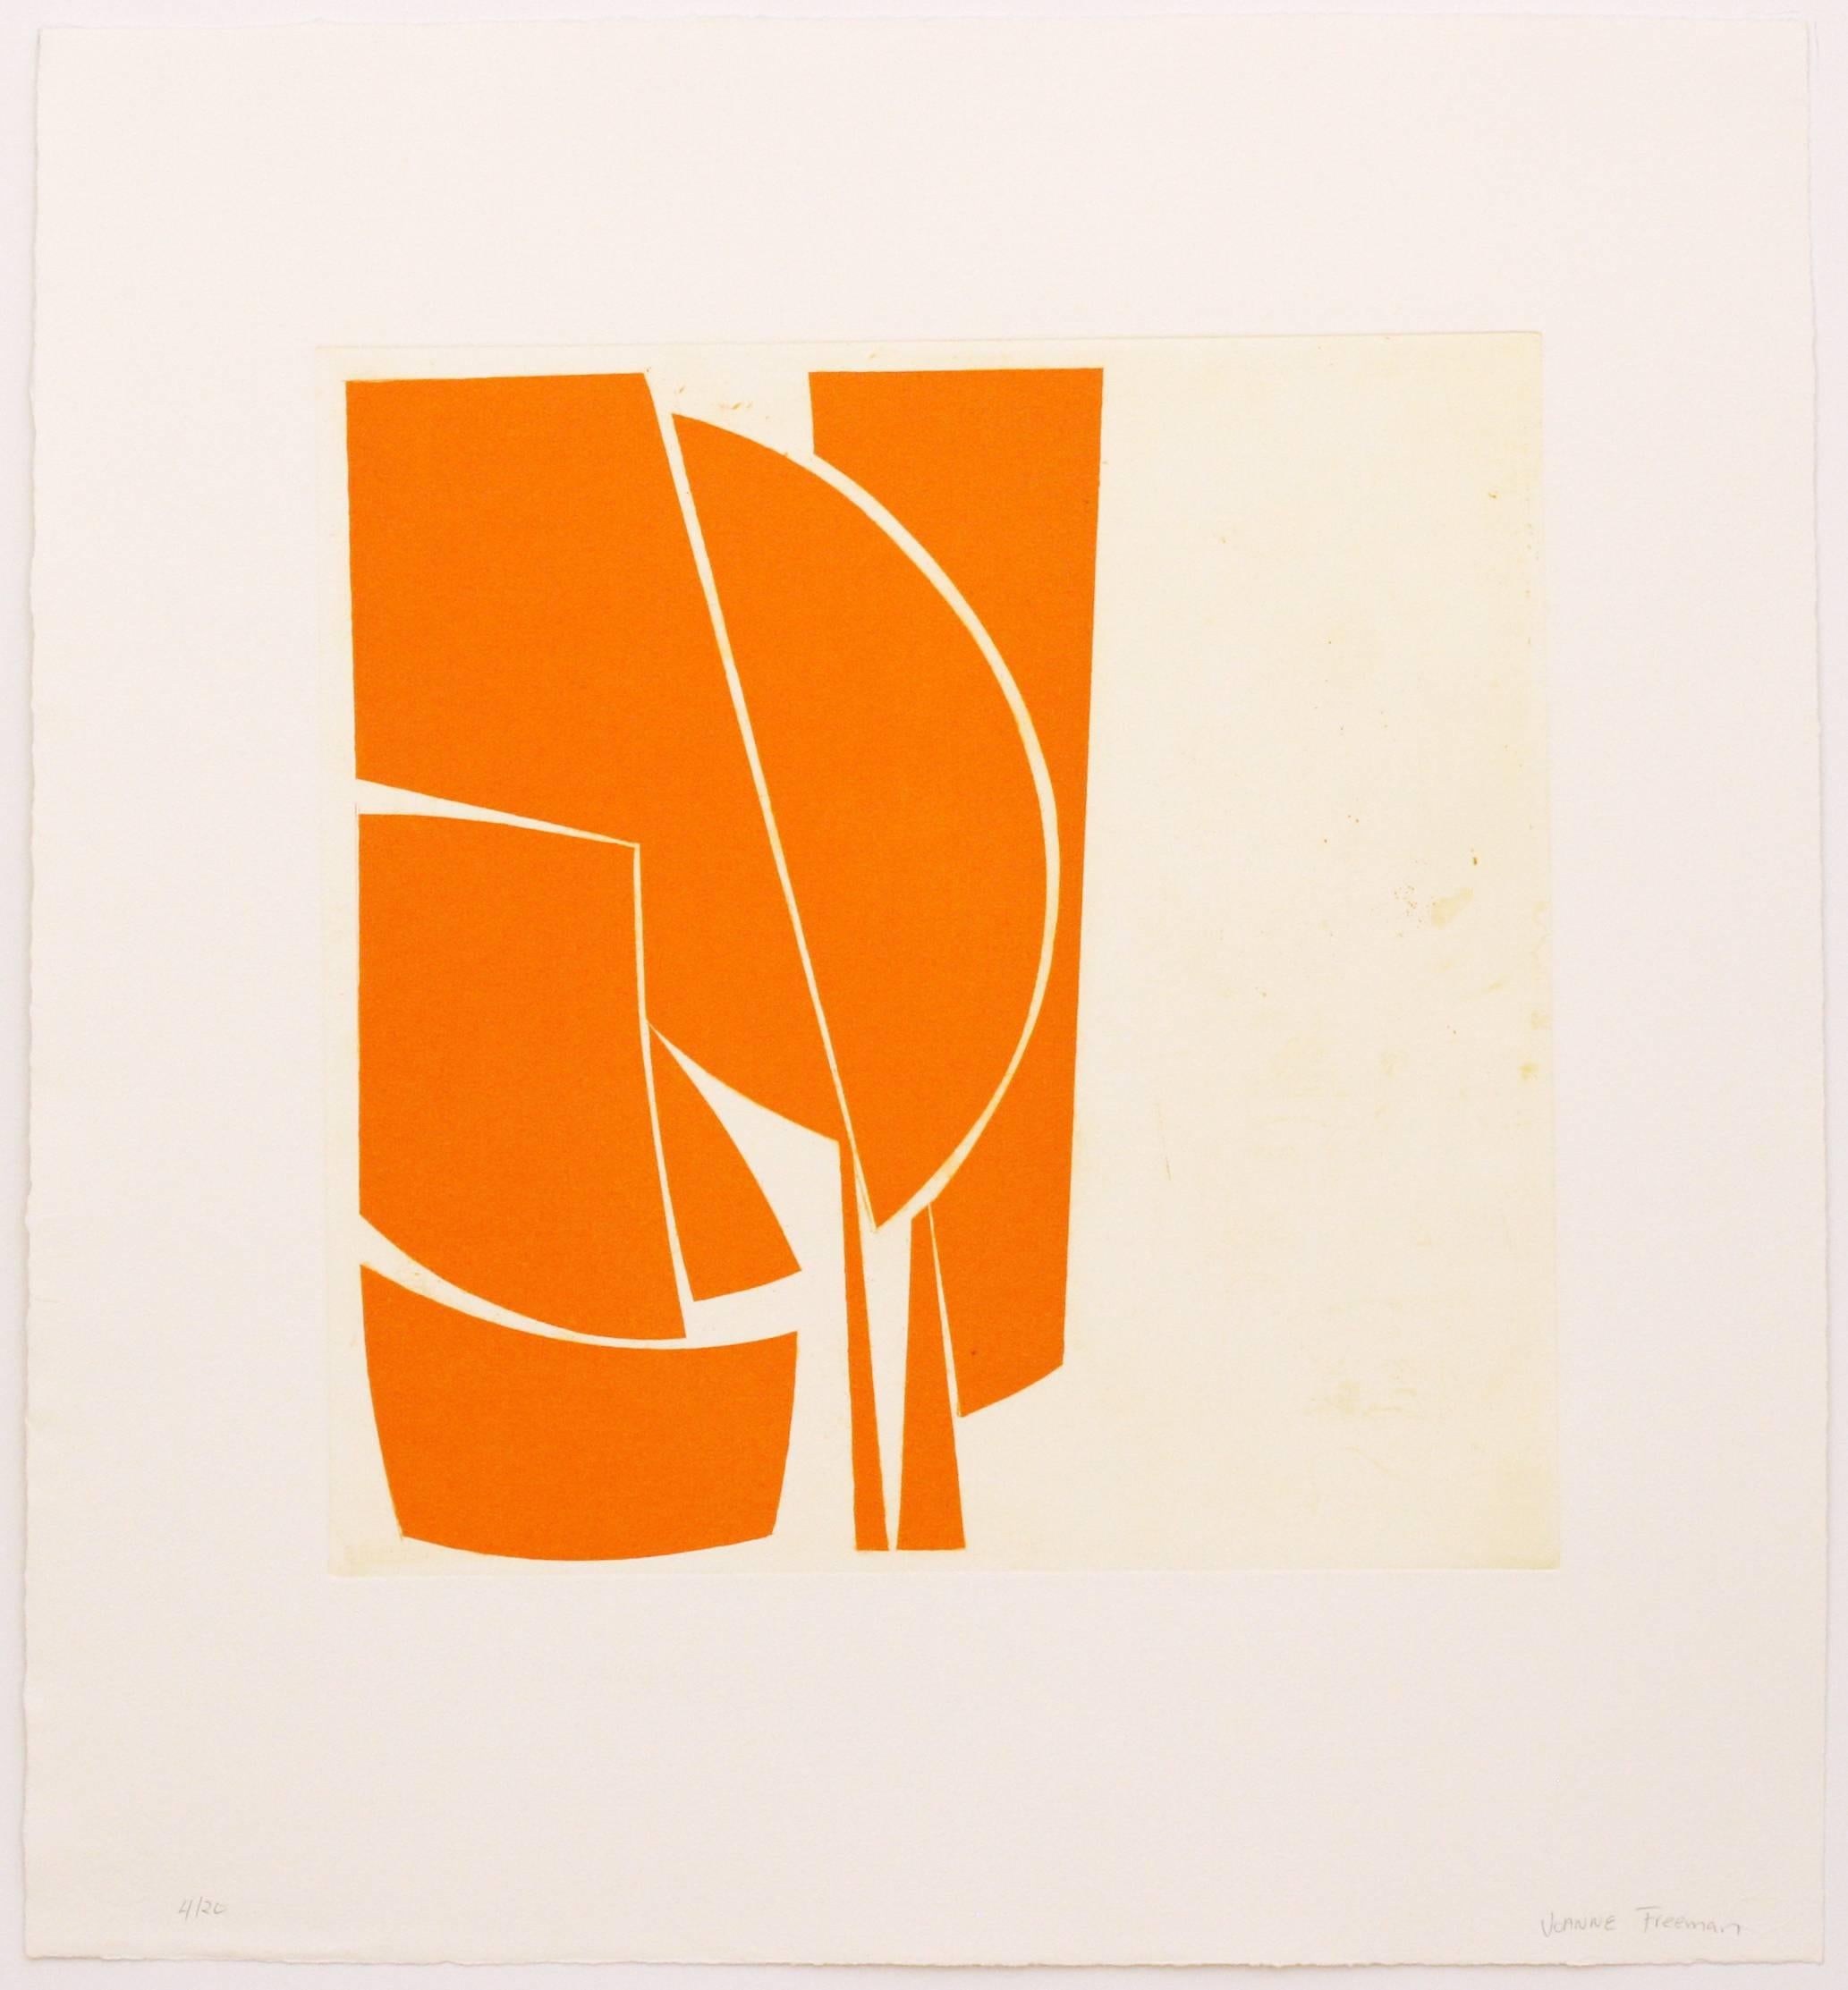 Joanne Freeman Abstract Print - “Covers One Orange”, abstract aquatint print, mid-century modern, yellow orange